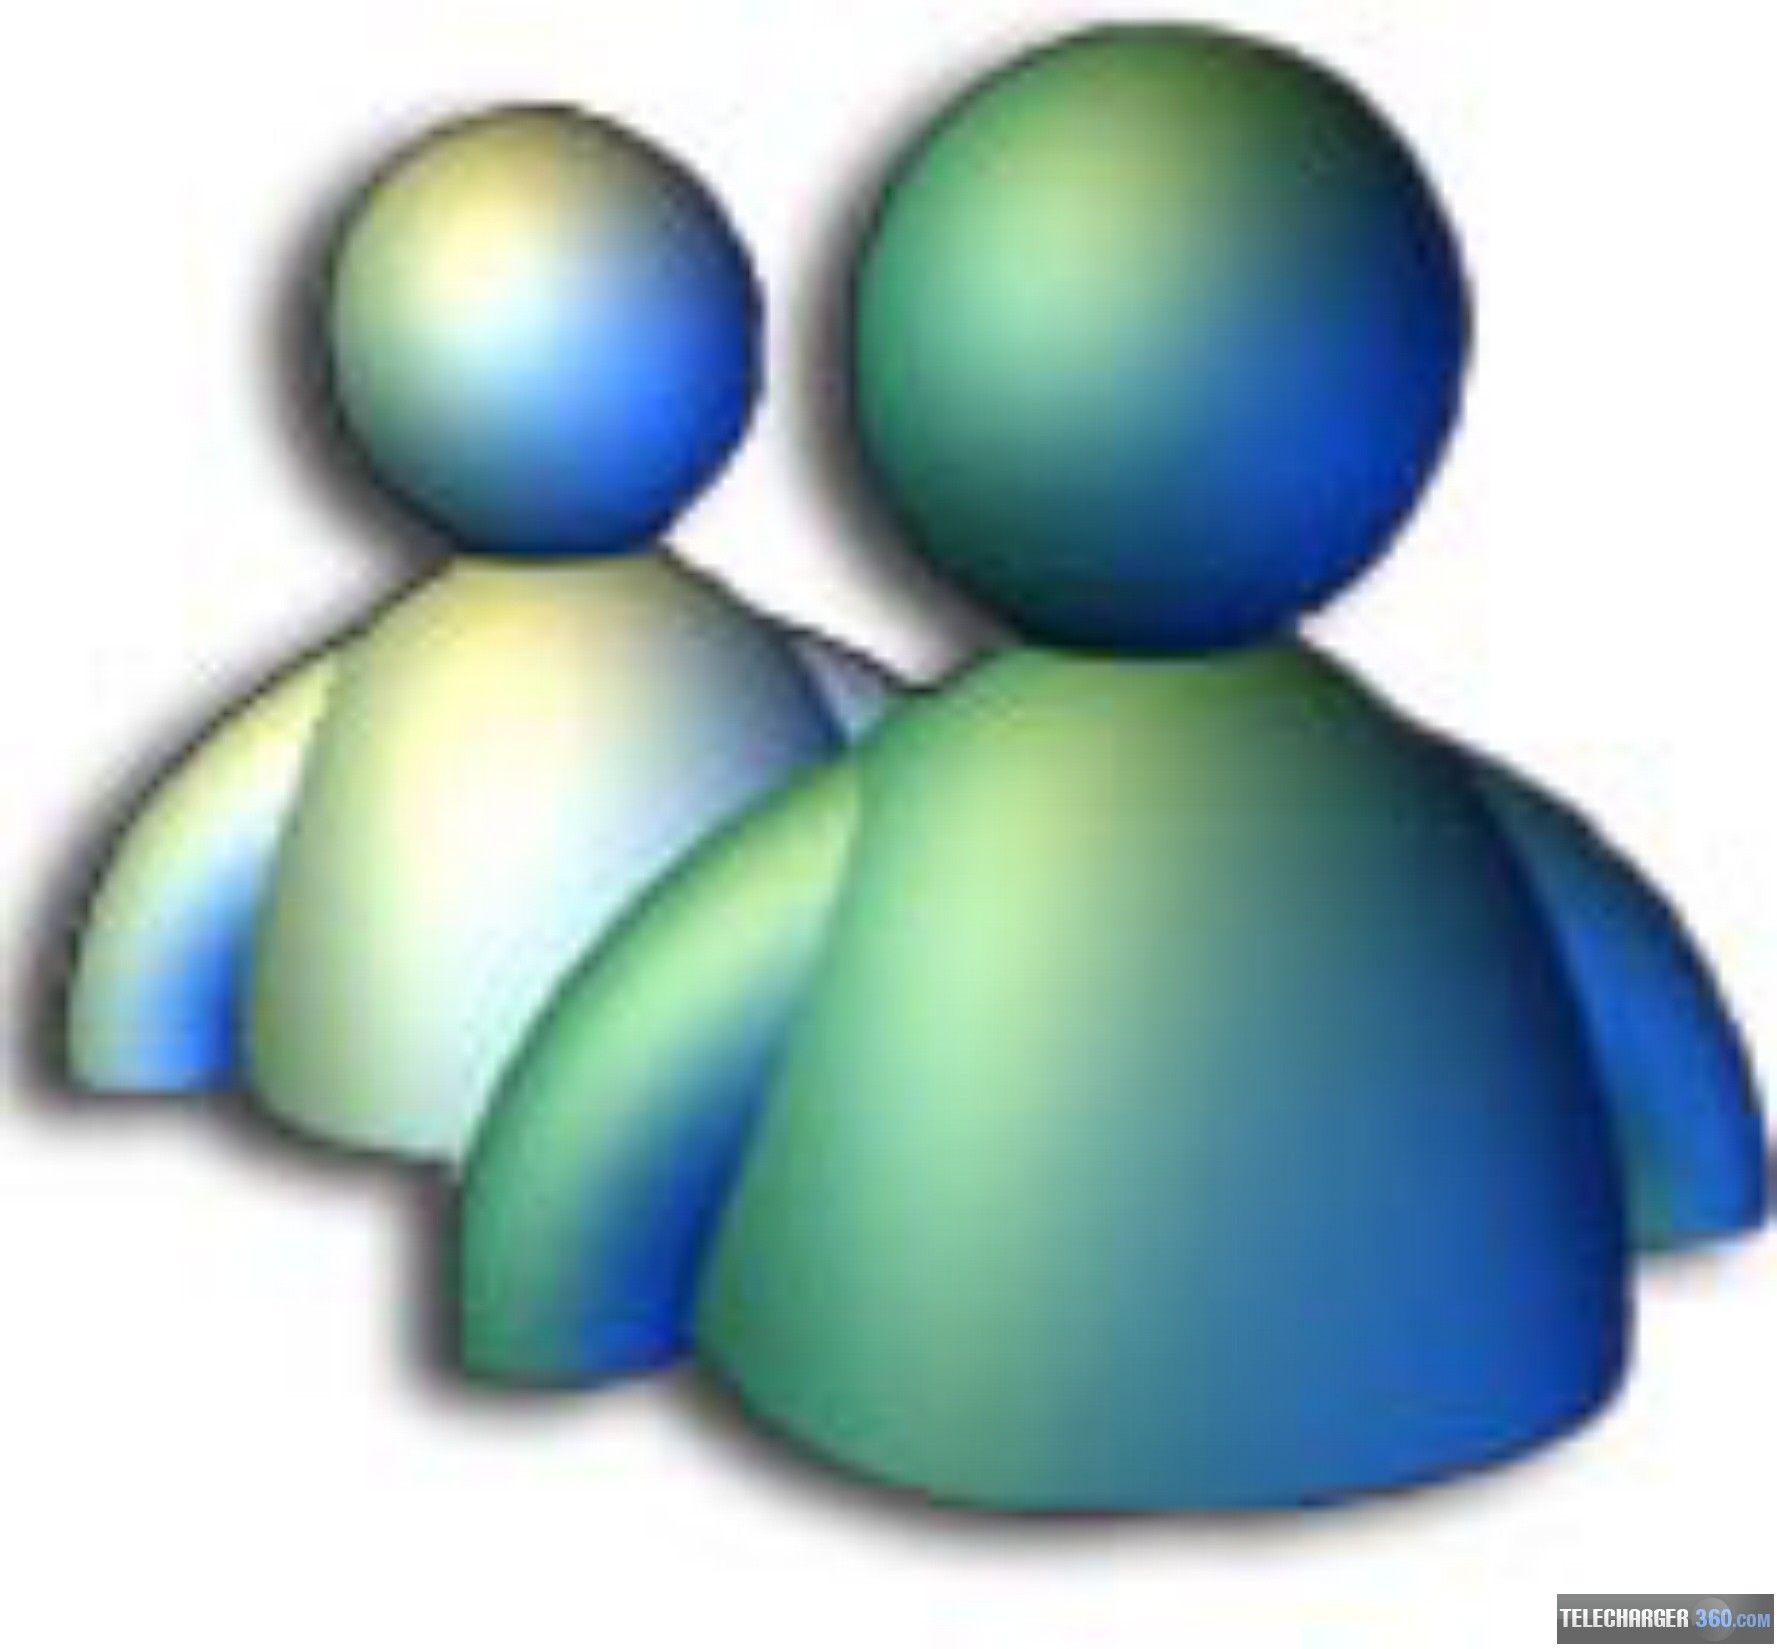 download msn messenger logo